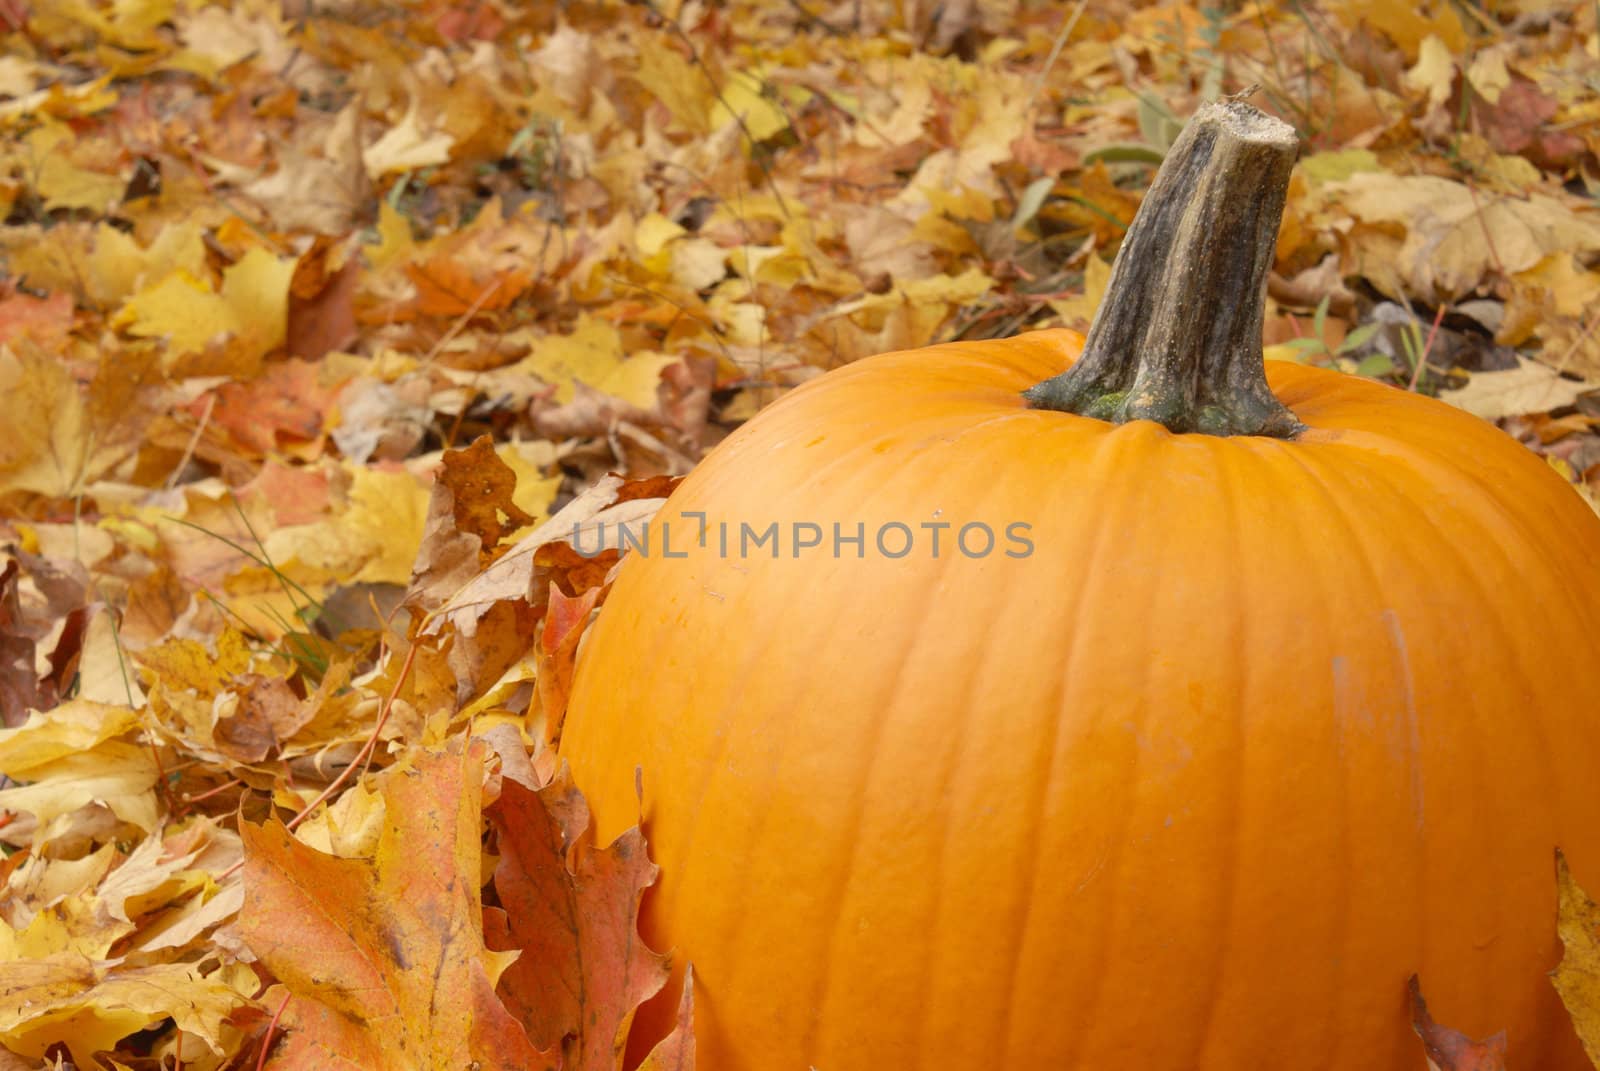 Autumn Pumpkin by AlphaBaby